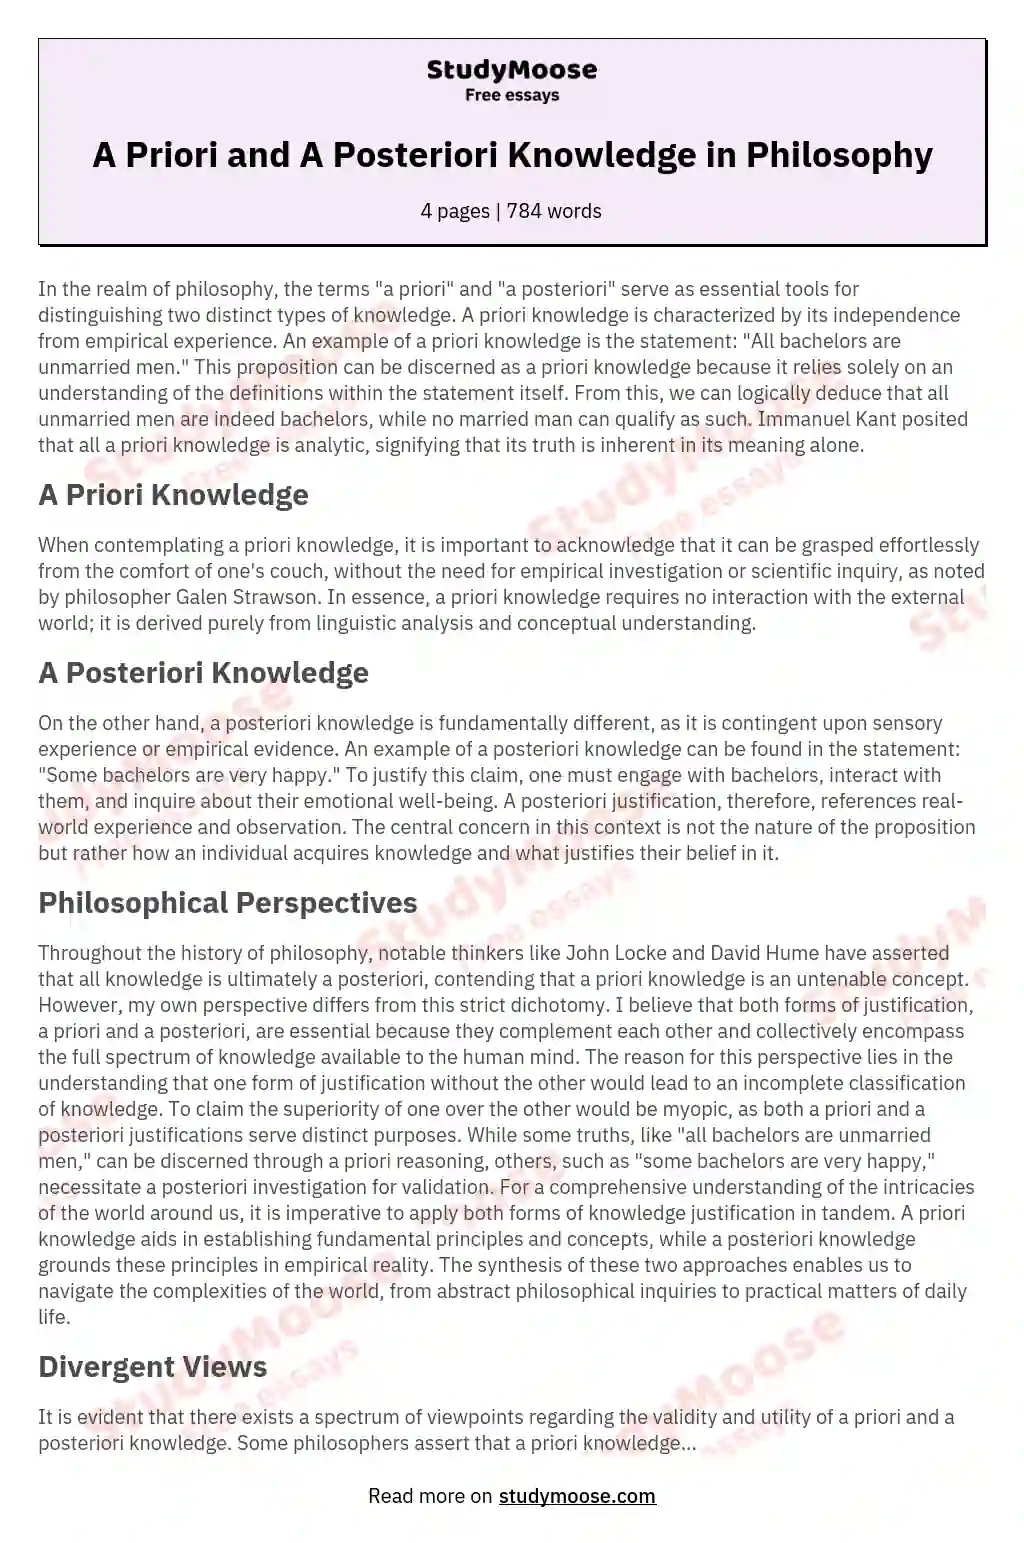 A Priori and A Posteriori Knowledge in Philosophy essay